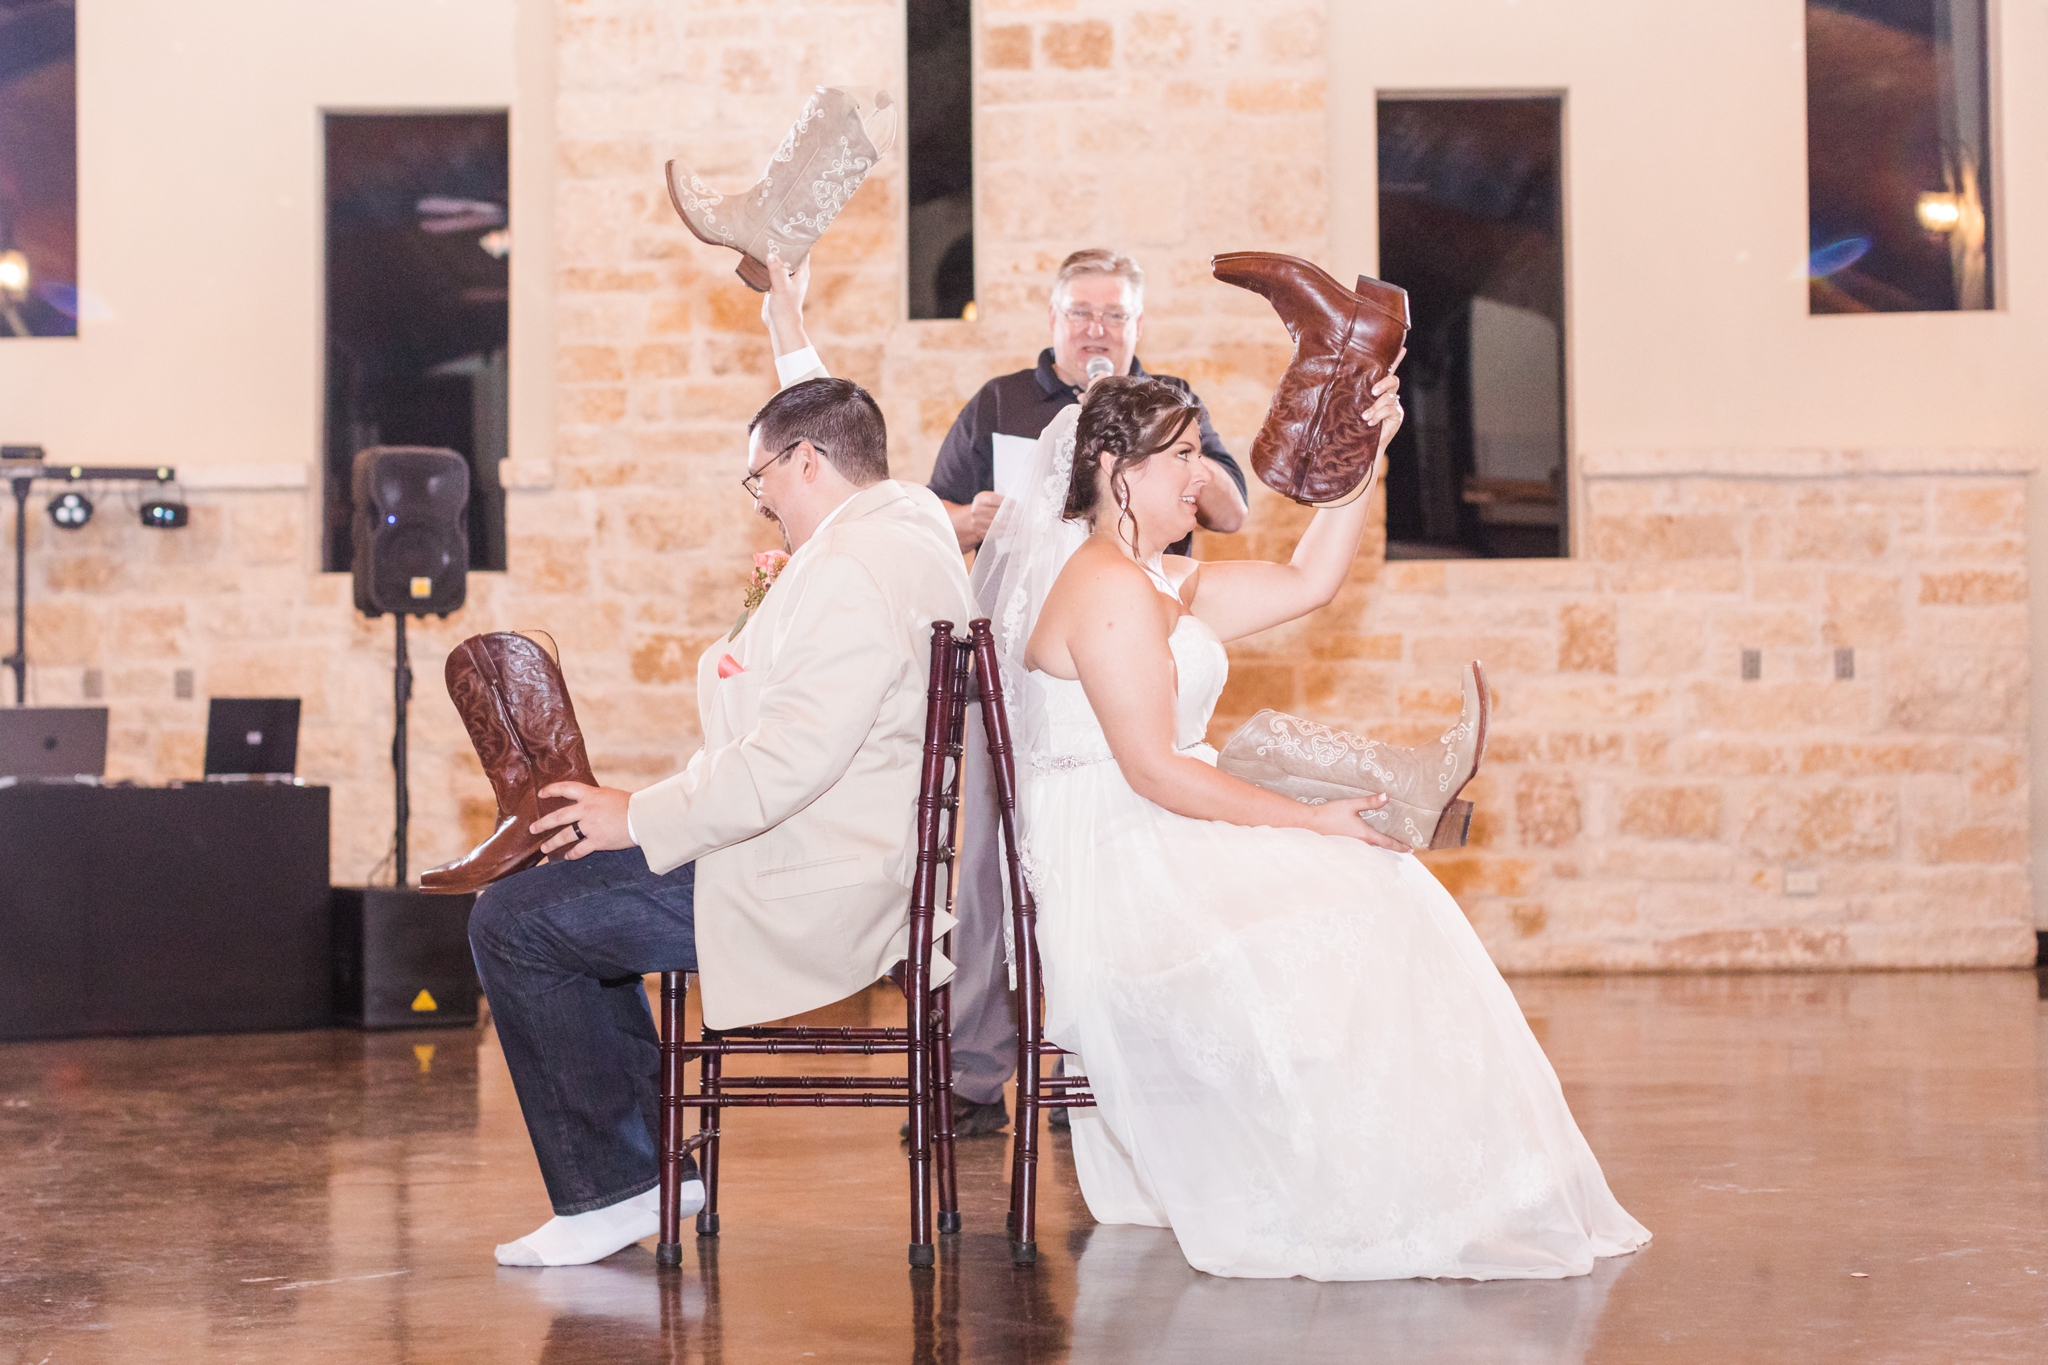 A Coral and Ivory Wedding at The Marquardt Ranch in Boerne, TX by Dawn Elizabeth Studios, San Antonio Wedding Photographer